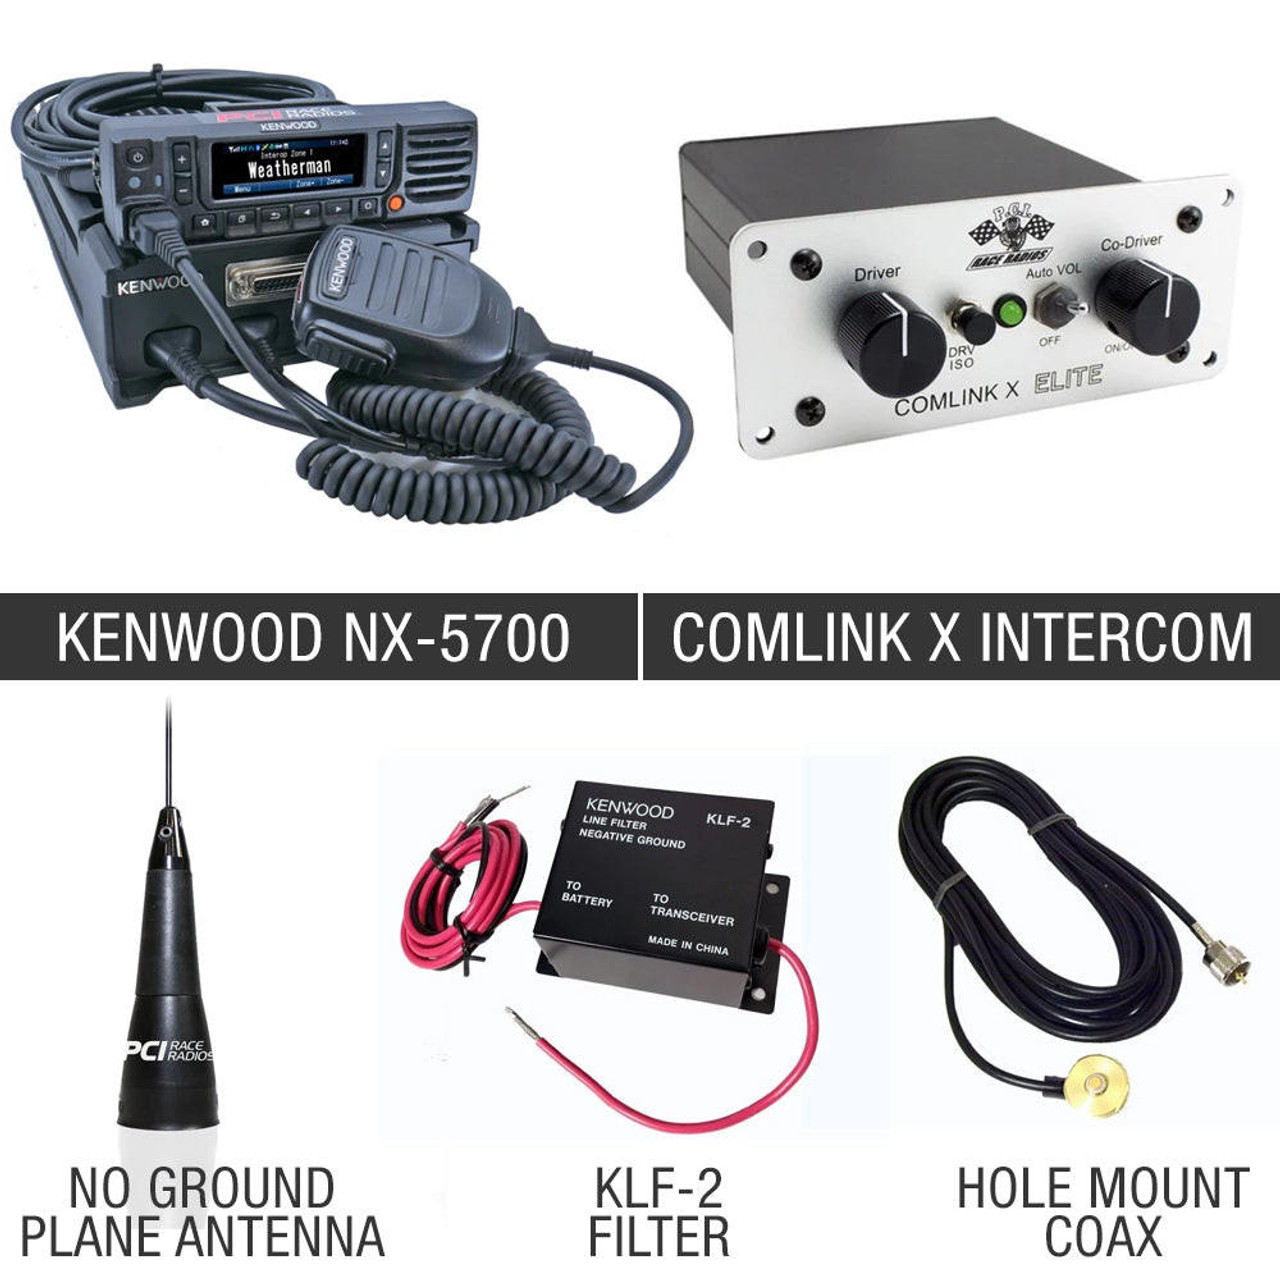 PCI Race Radios Kenwood NX-5700 100W Intercom Race Package 10 w/ Remote Head